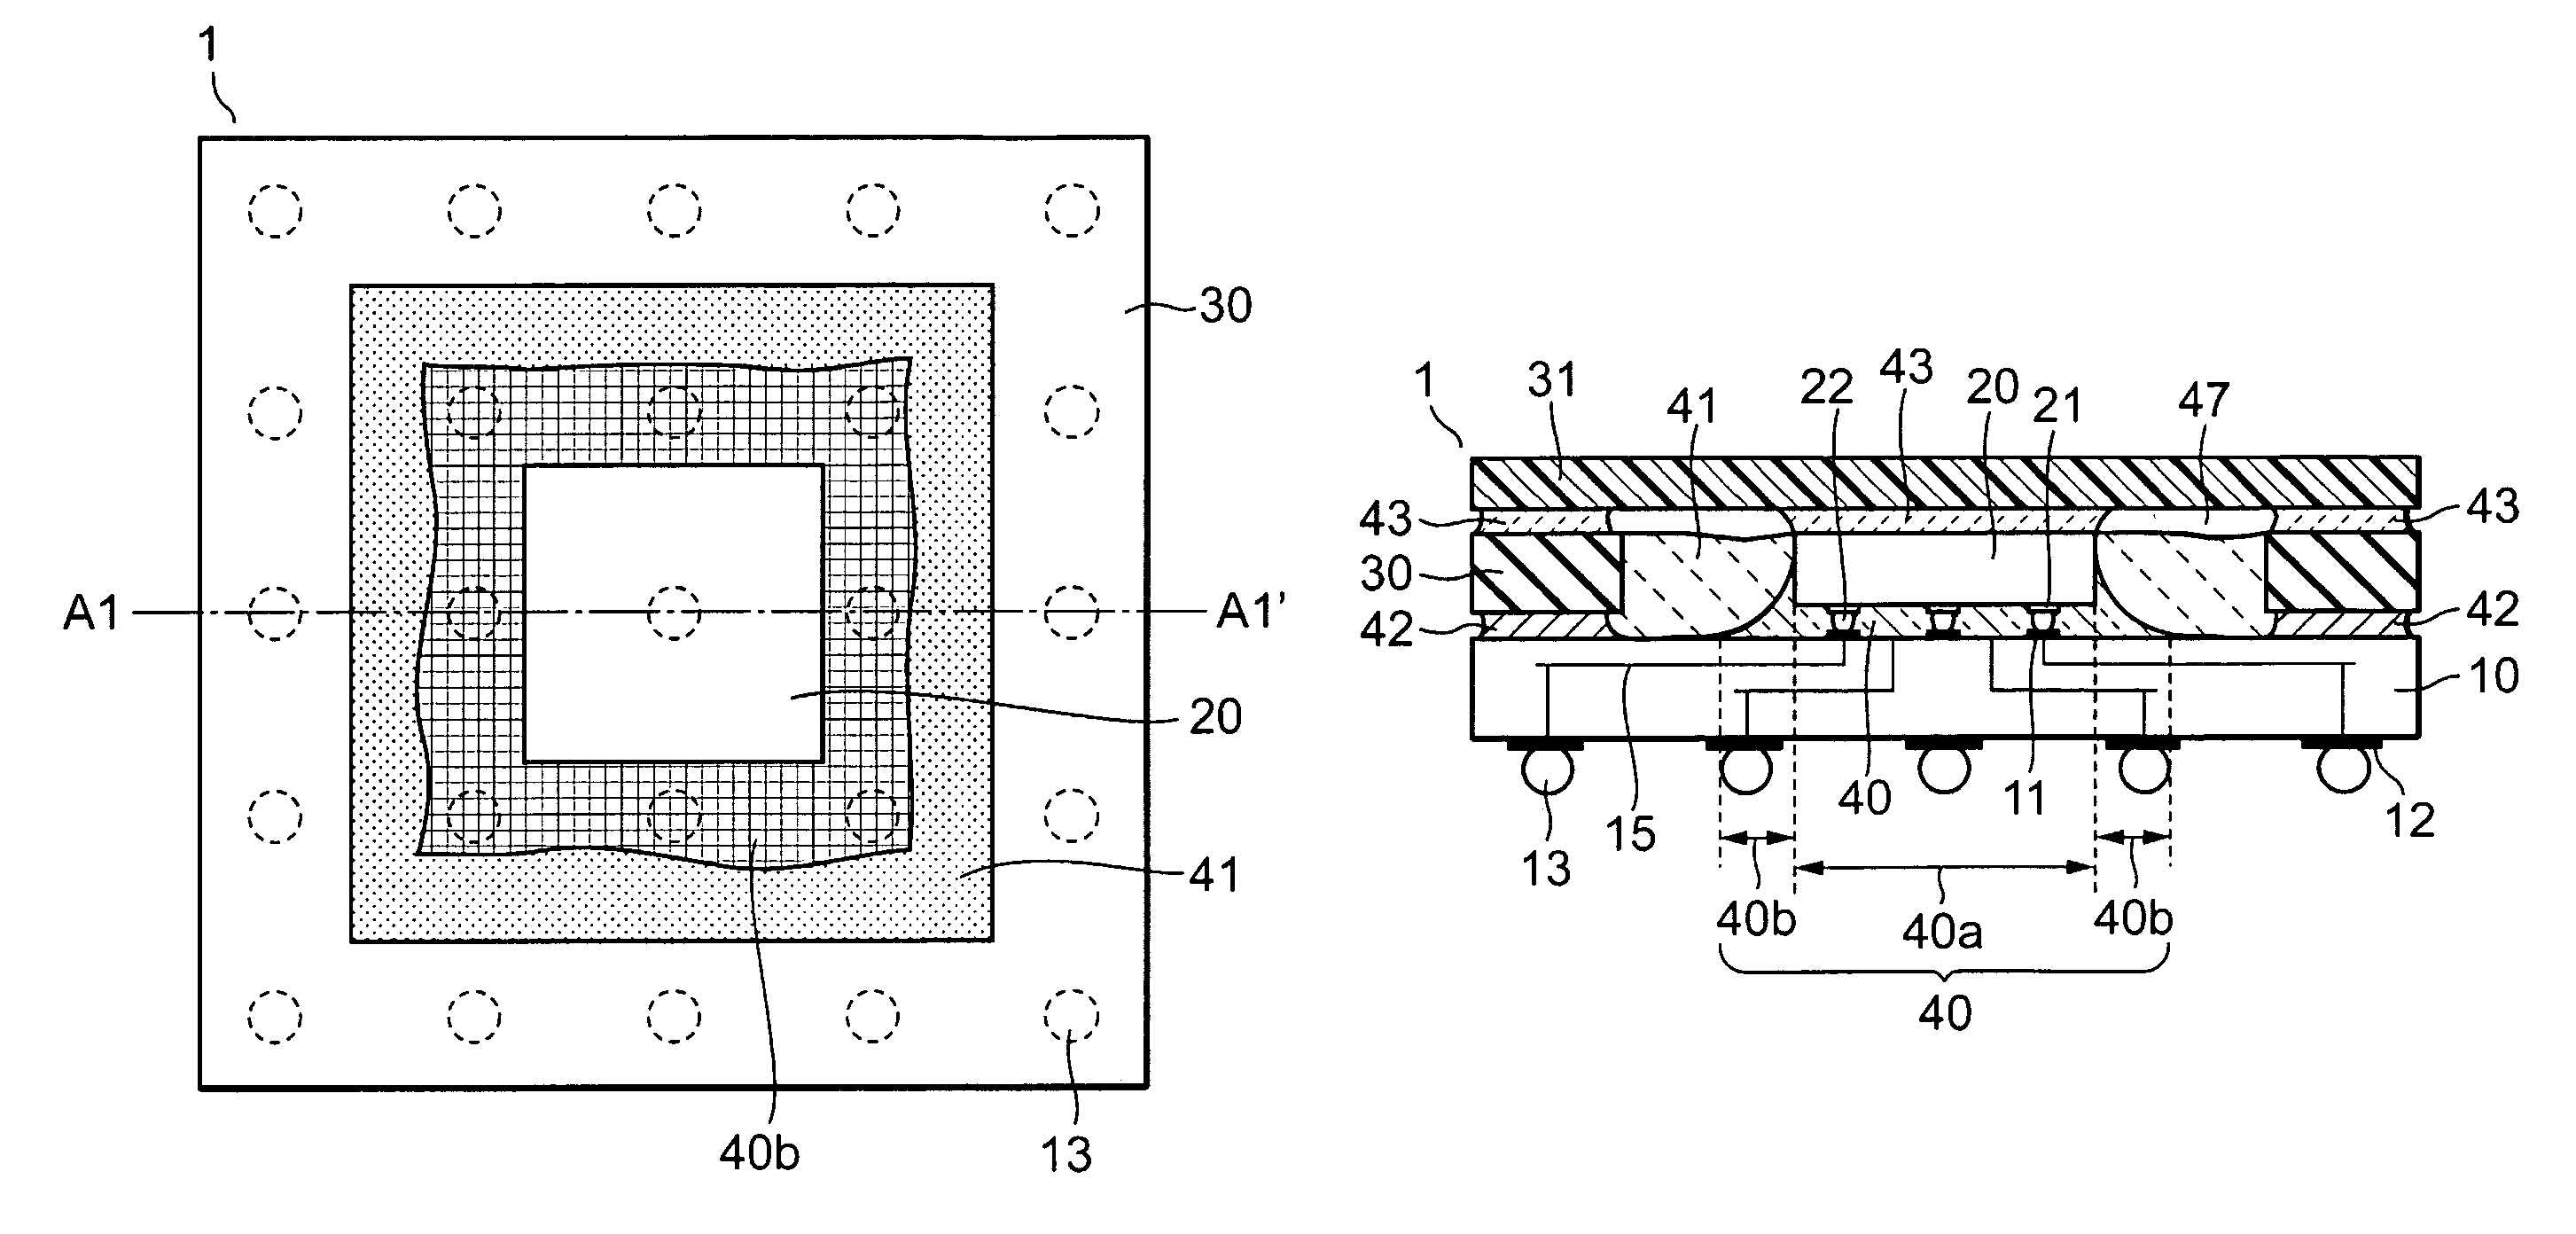 Warp-suppressed semiconductor device